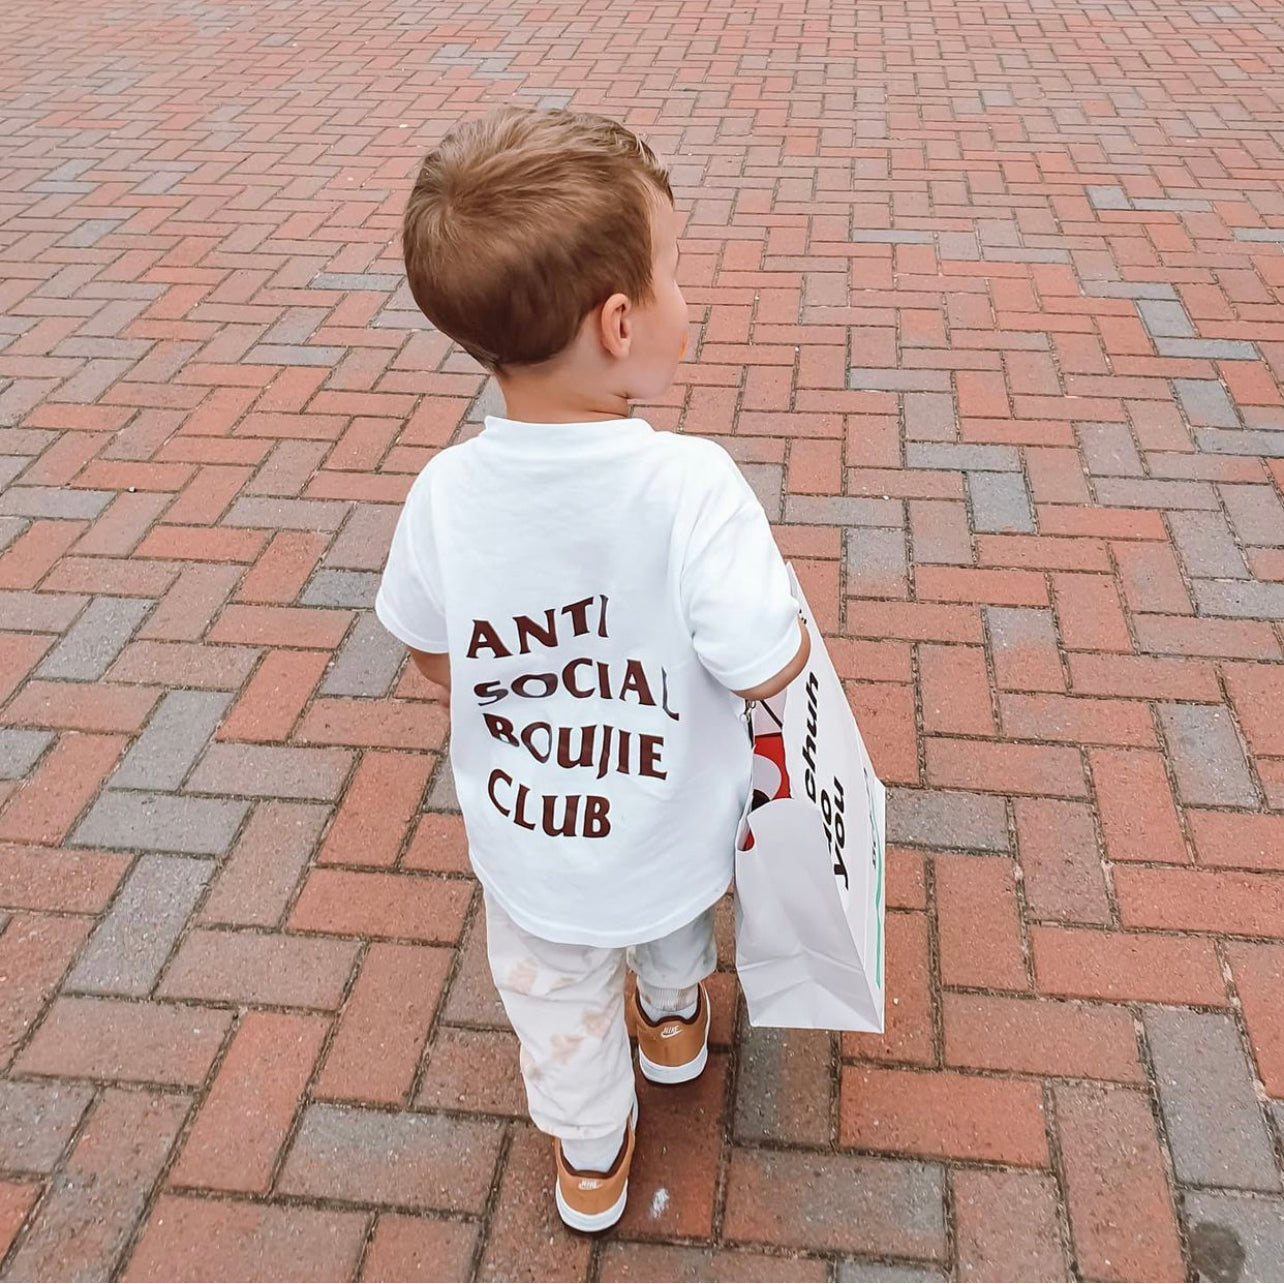 Anti Social Boujie Club